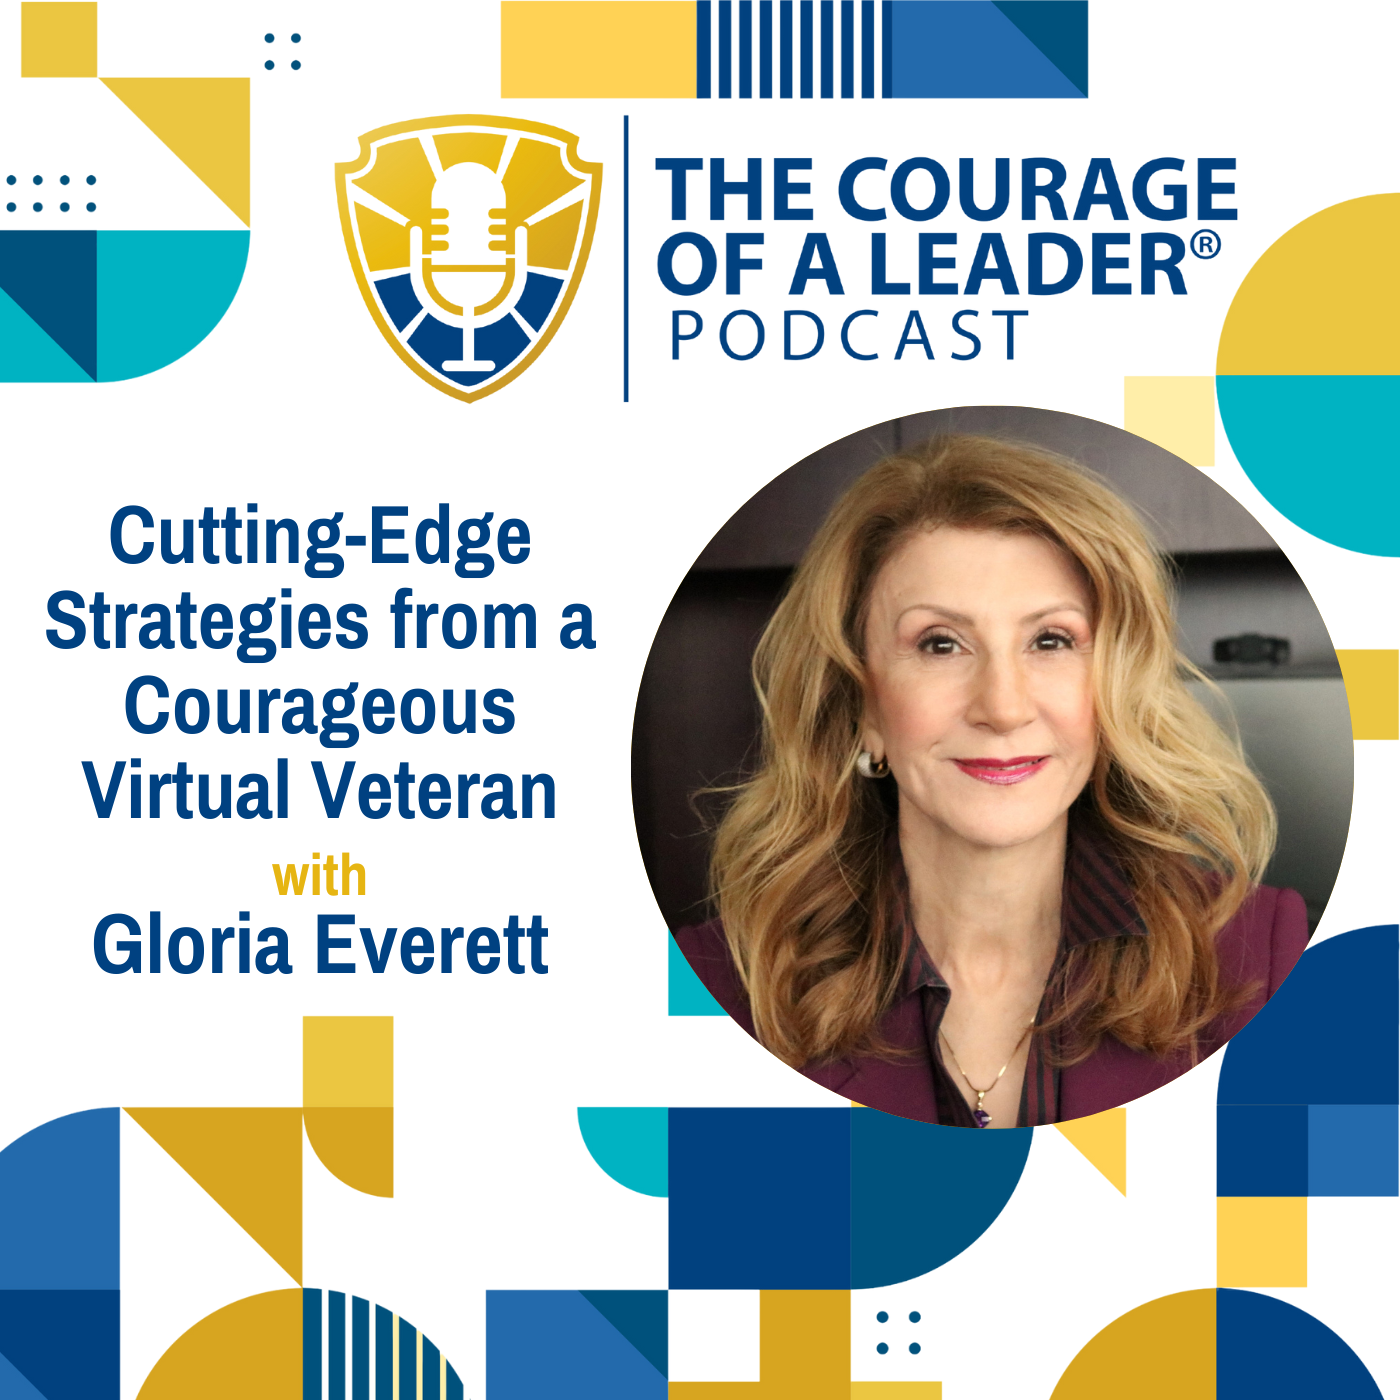 Cutting-Edge Strategies from a Courageous Virtual Veteran with Gloria Everett